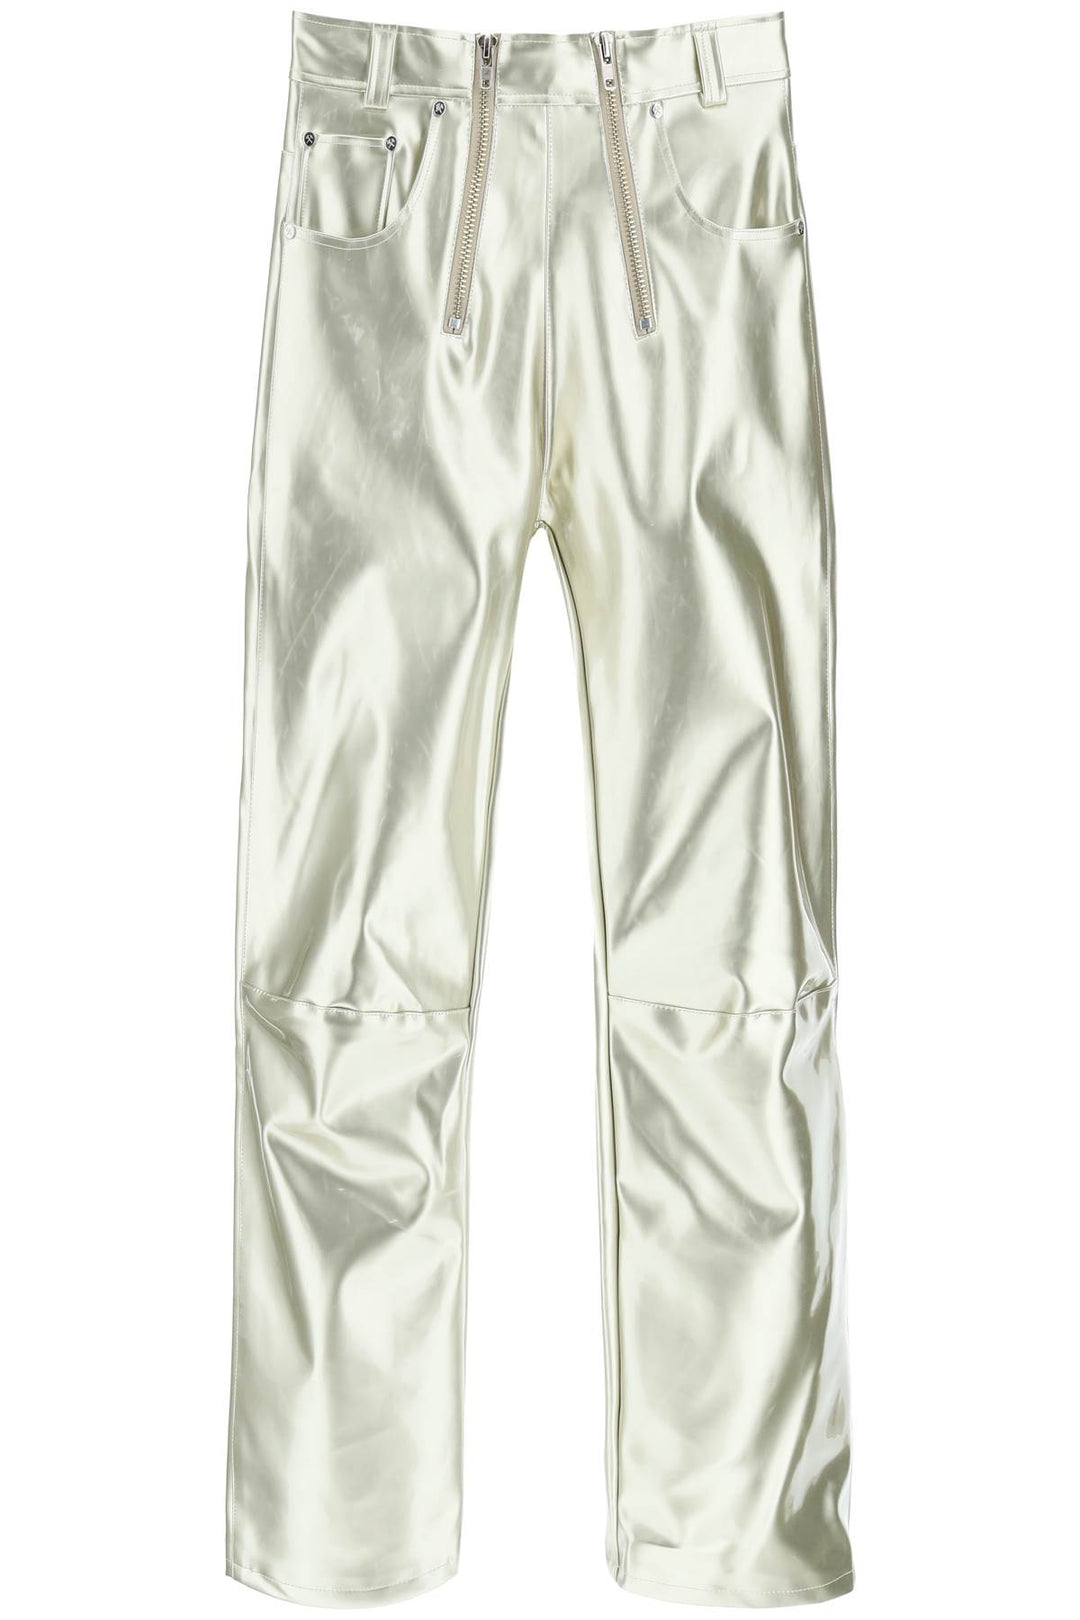 Gmbh double zip vinyl pants-0